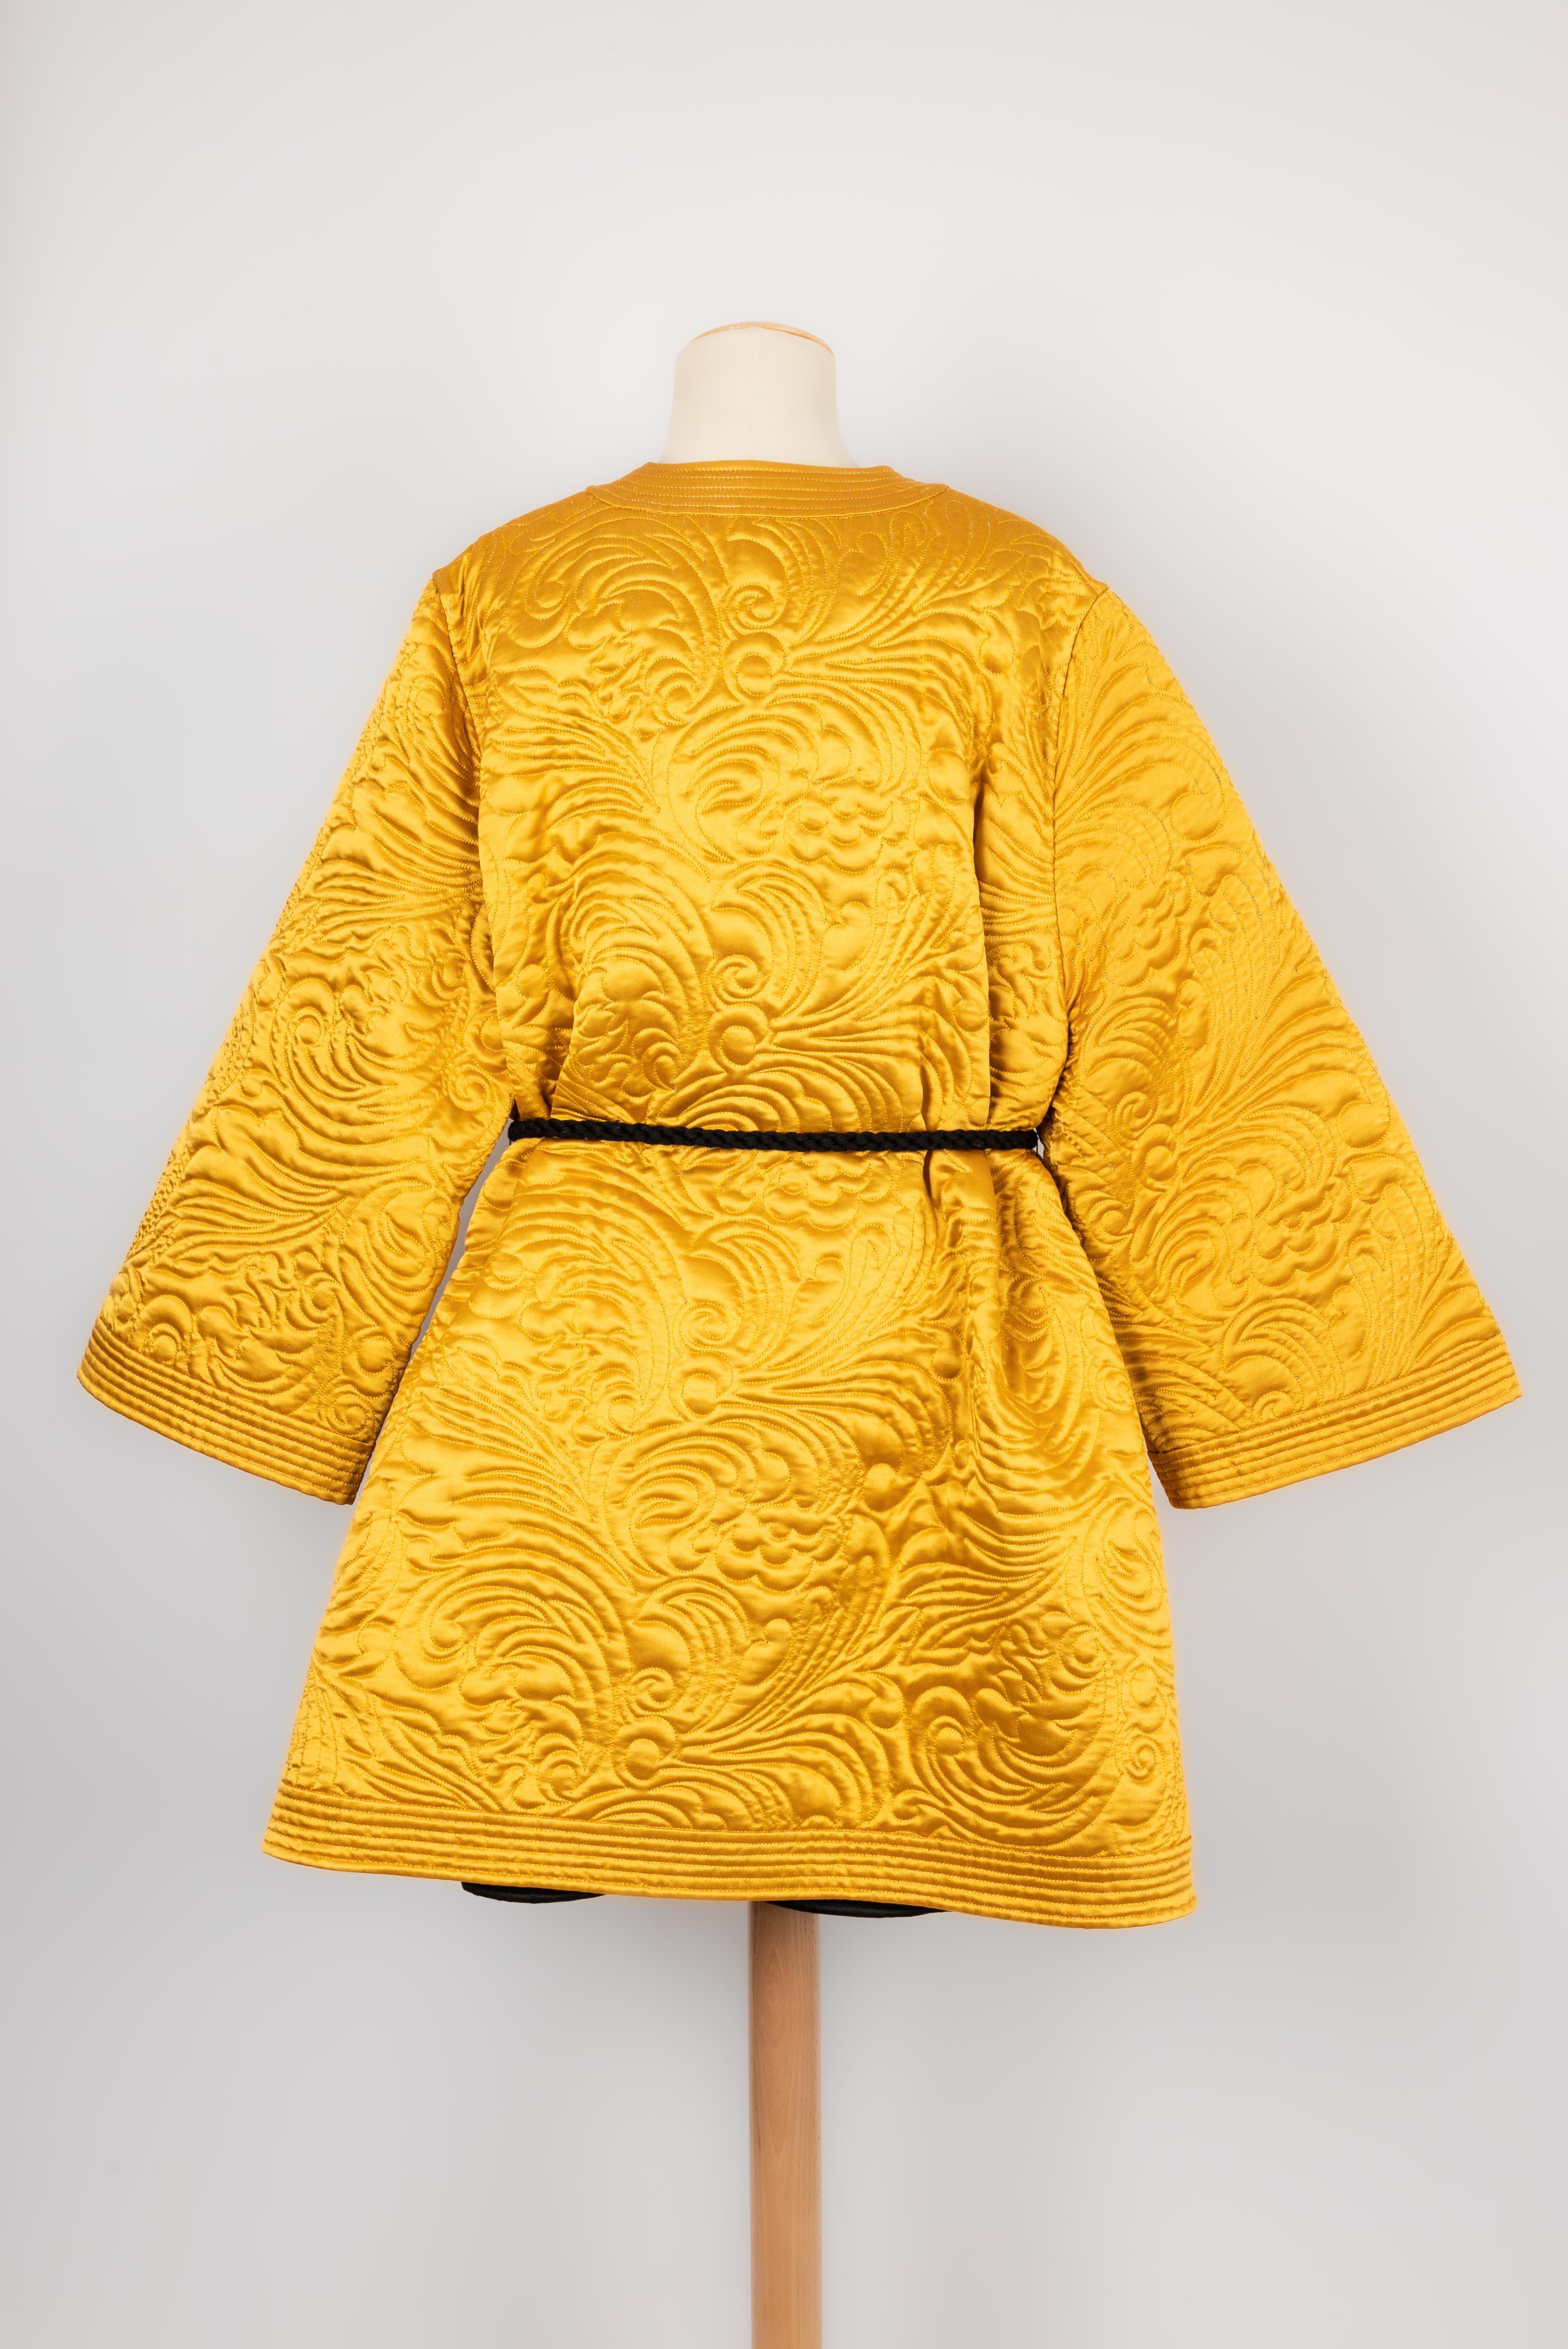 Yellow Valentino Haute Couture kimonos double jackets 1990 For Sale